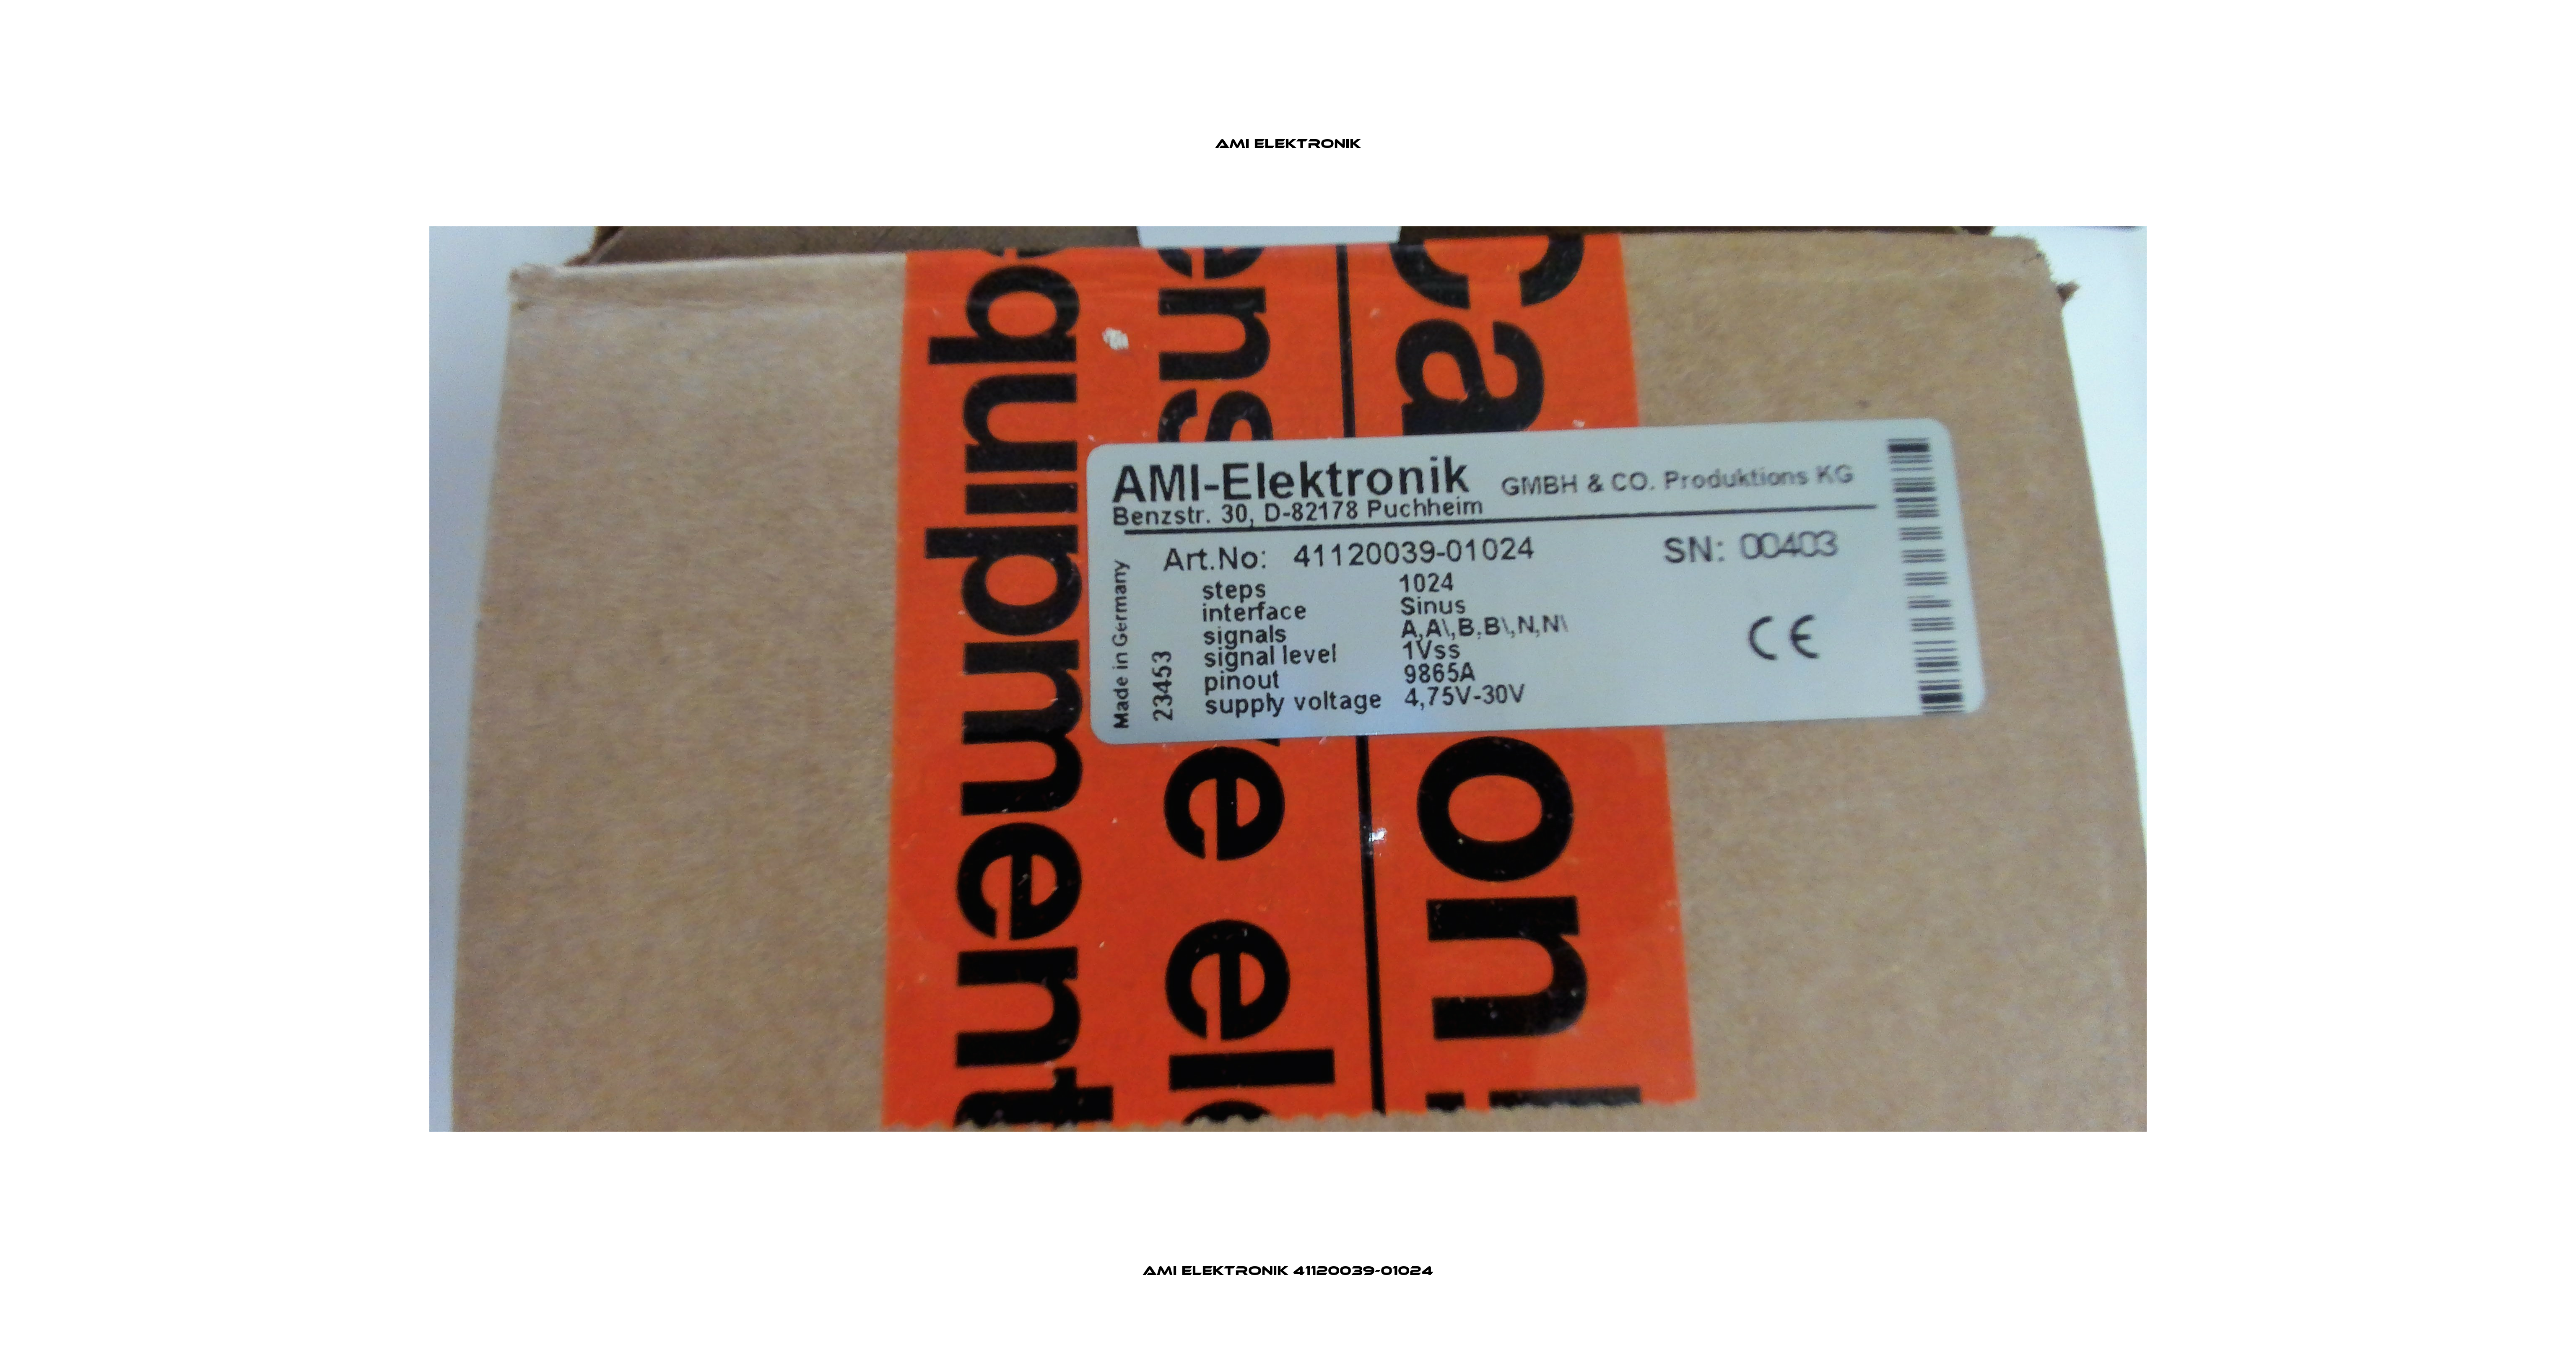 AMI ELEKTRONIK 41120039-01024 Ami Elektronik